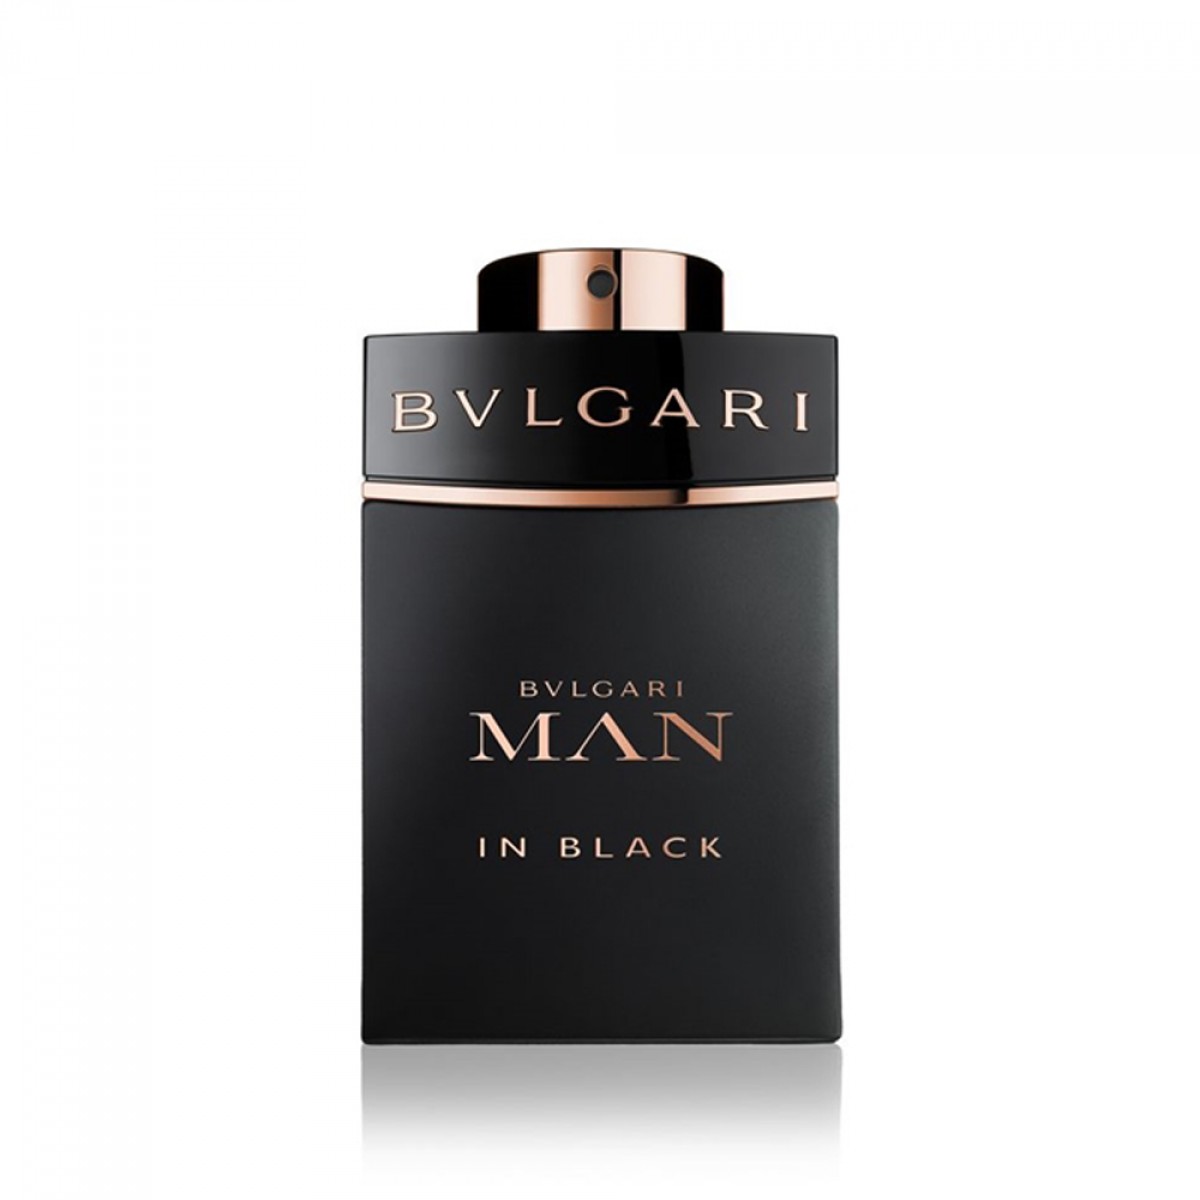 bvlgari perfume duty free